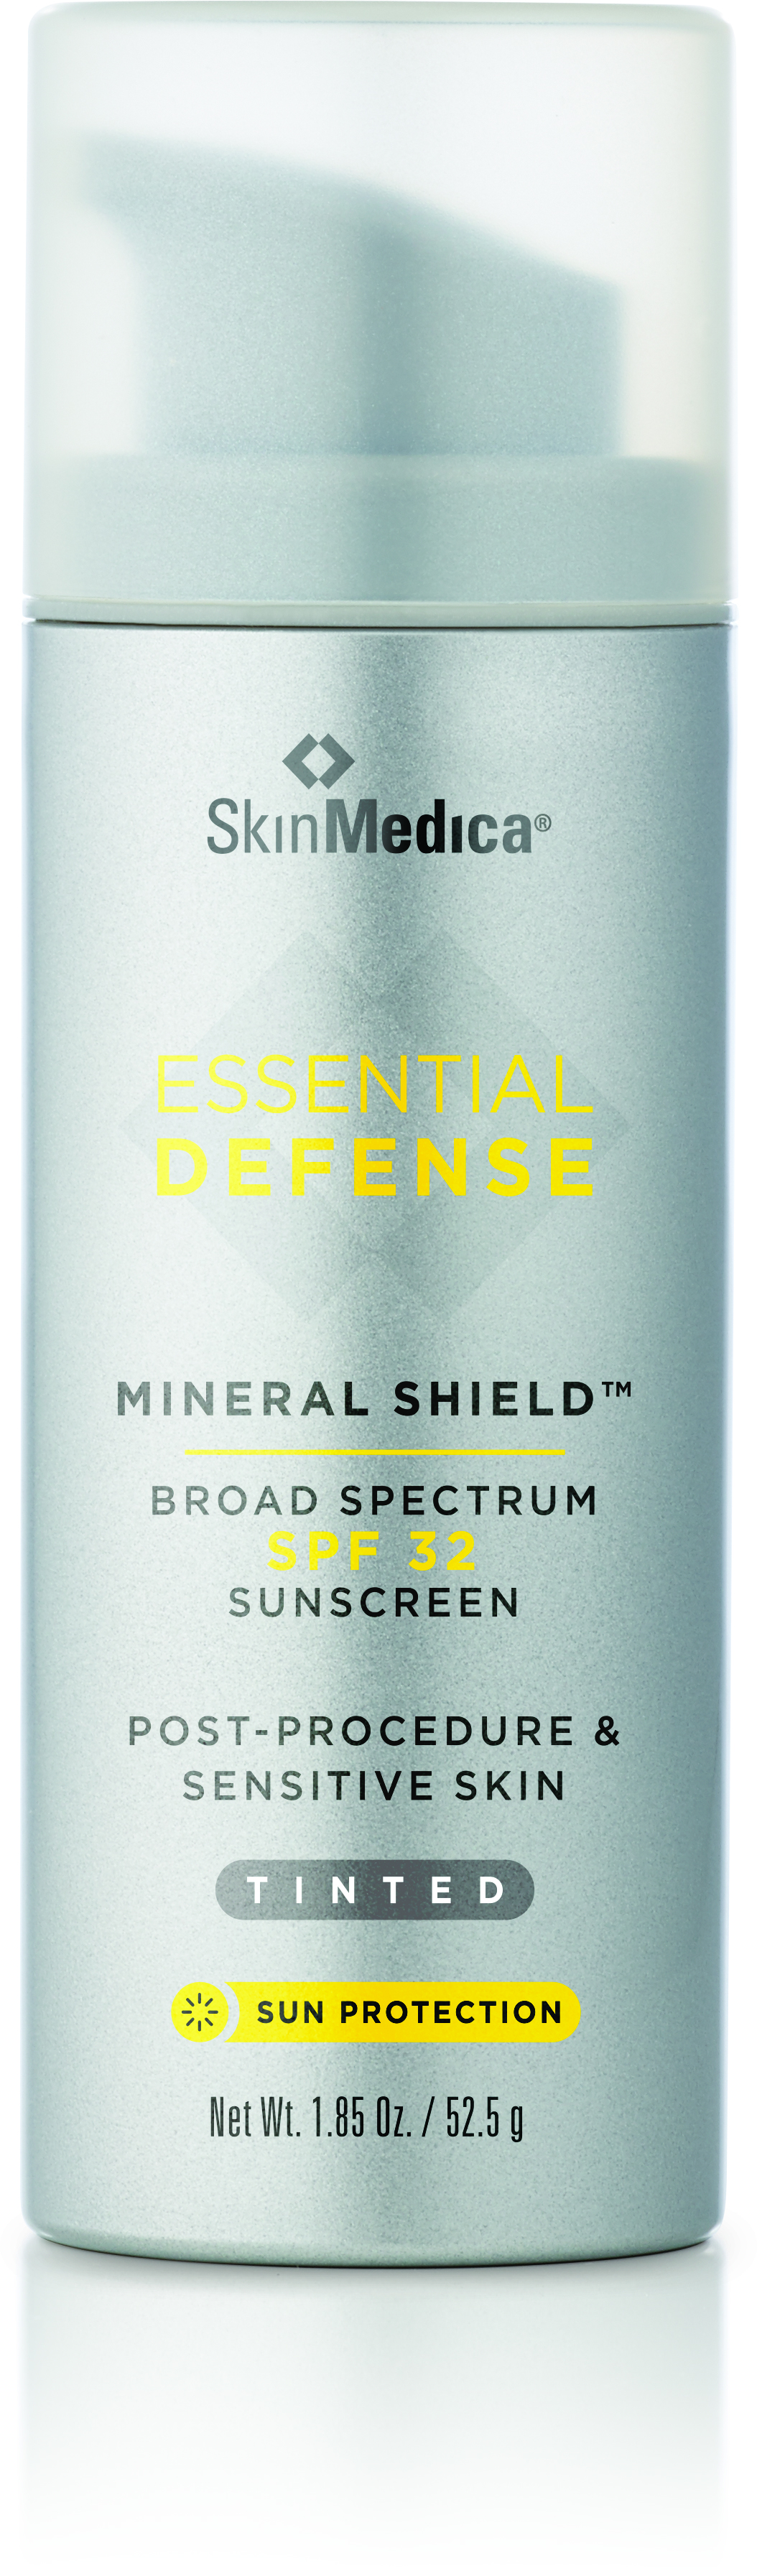 SkinMedica Essential Defense Mineral Shield Broad Spectrum SPF 32